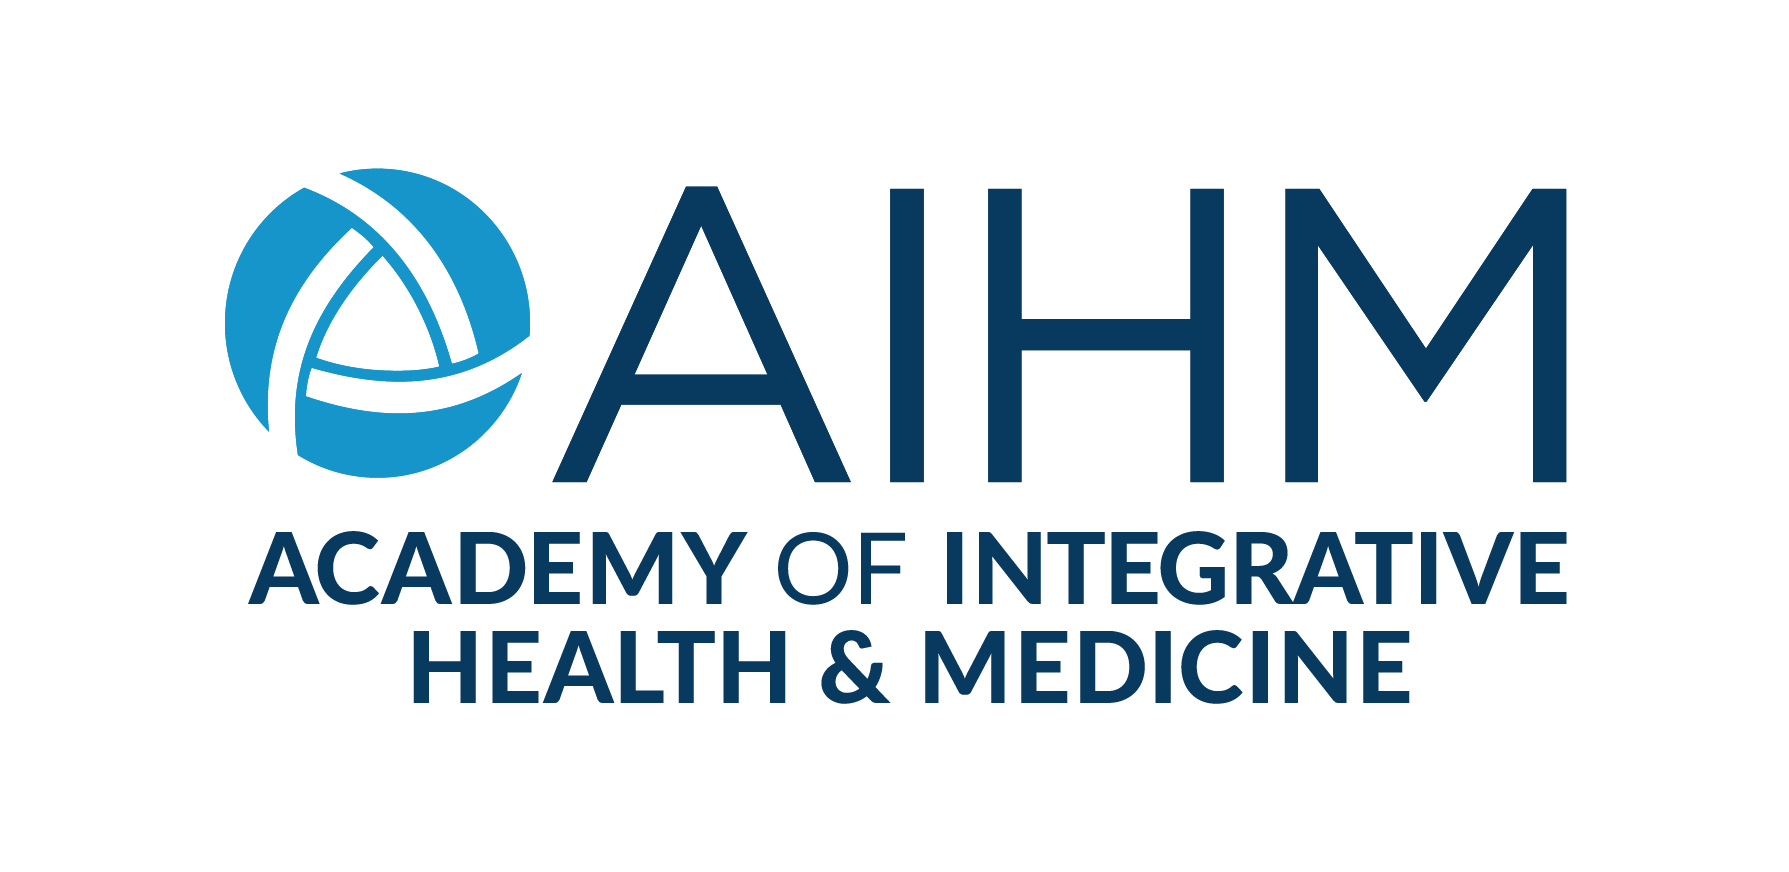 Academy of Integrative Health & Medicine Logo